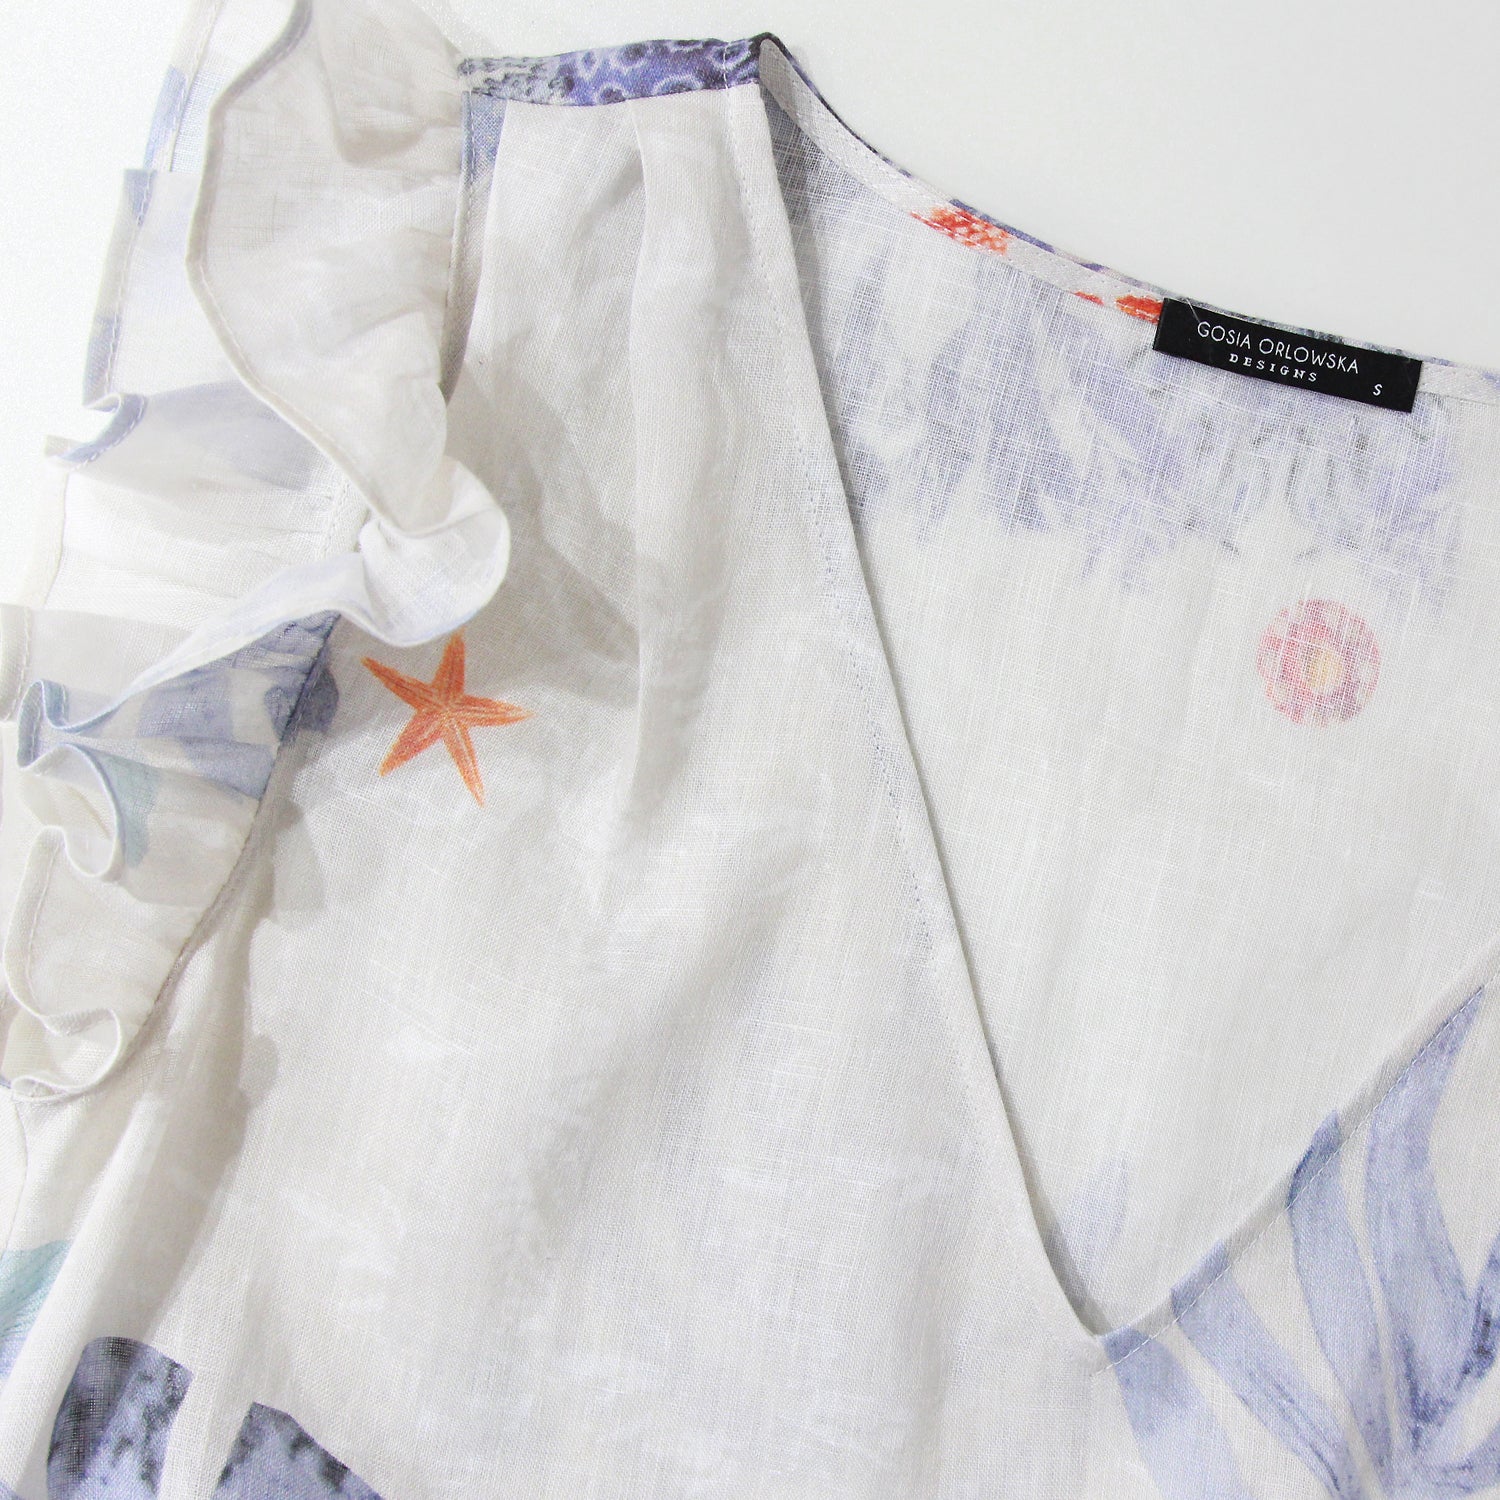 “MARE” Coral prints Linen Dress